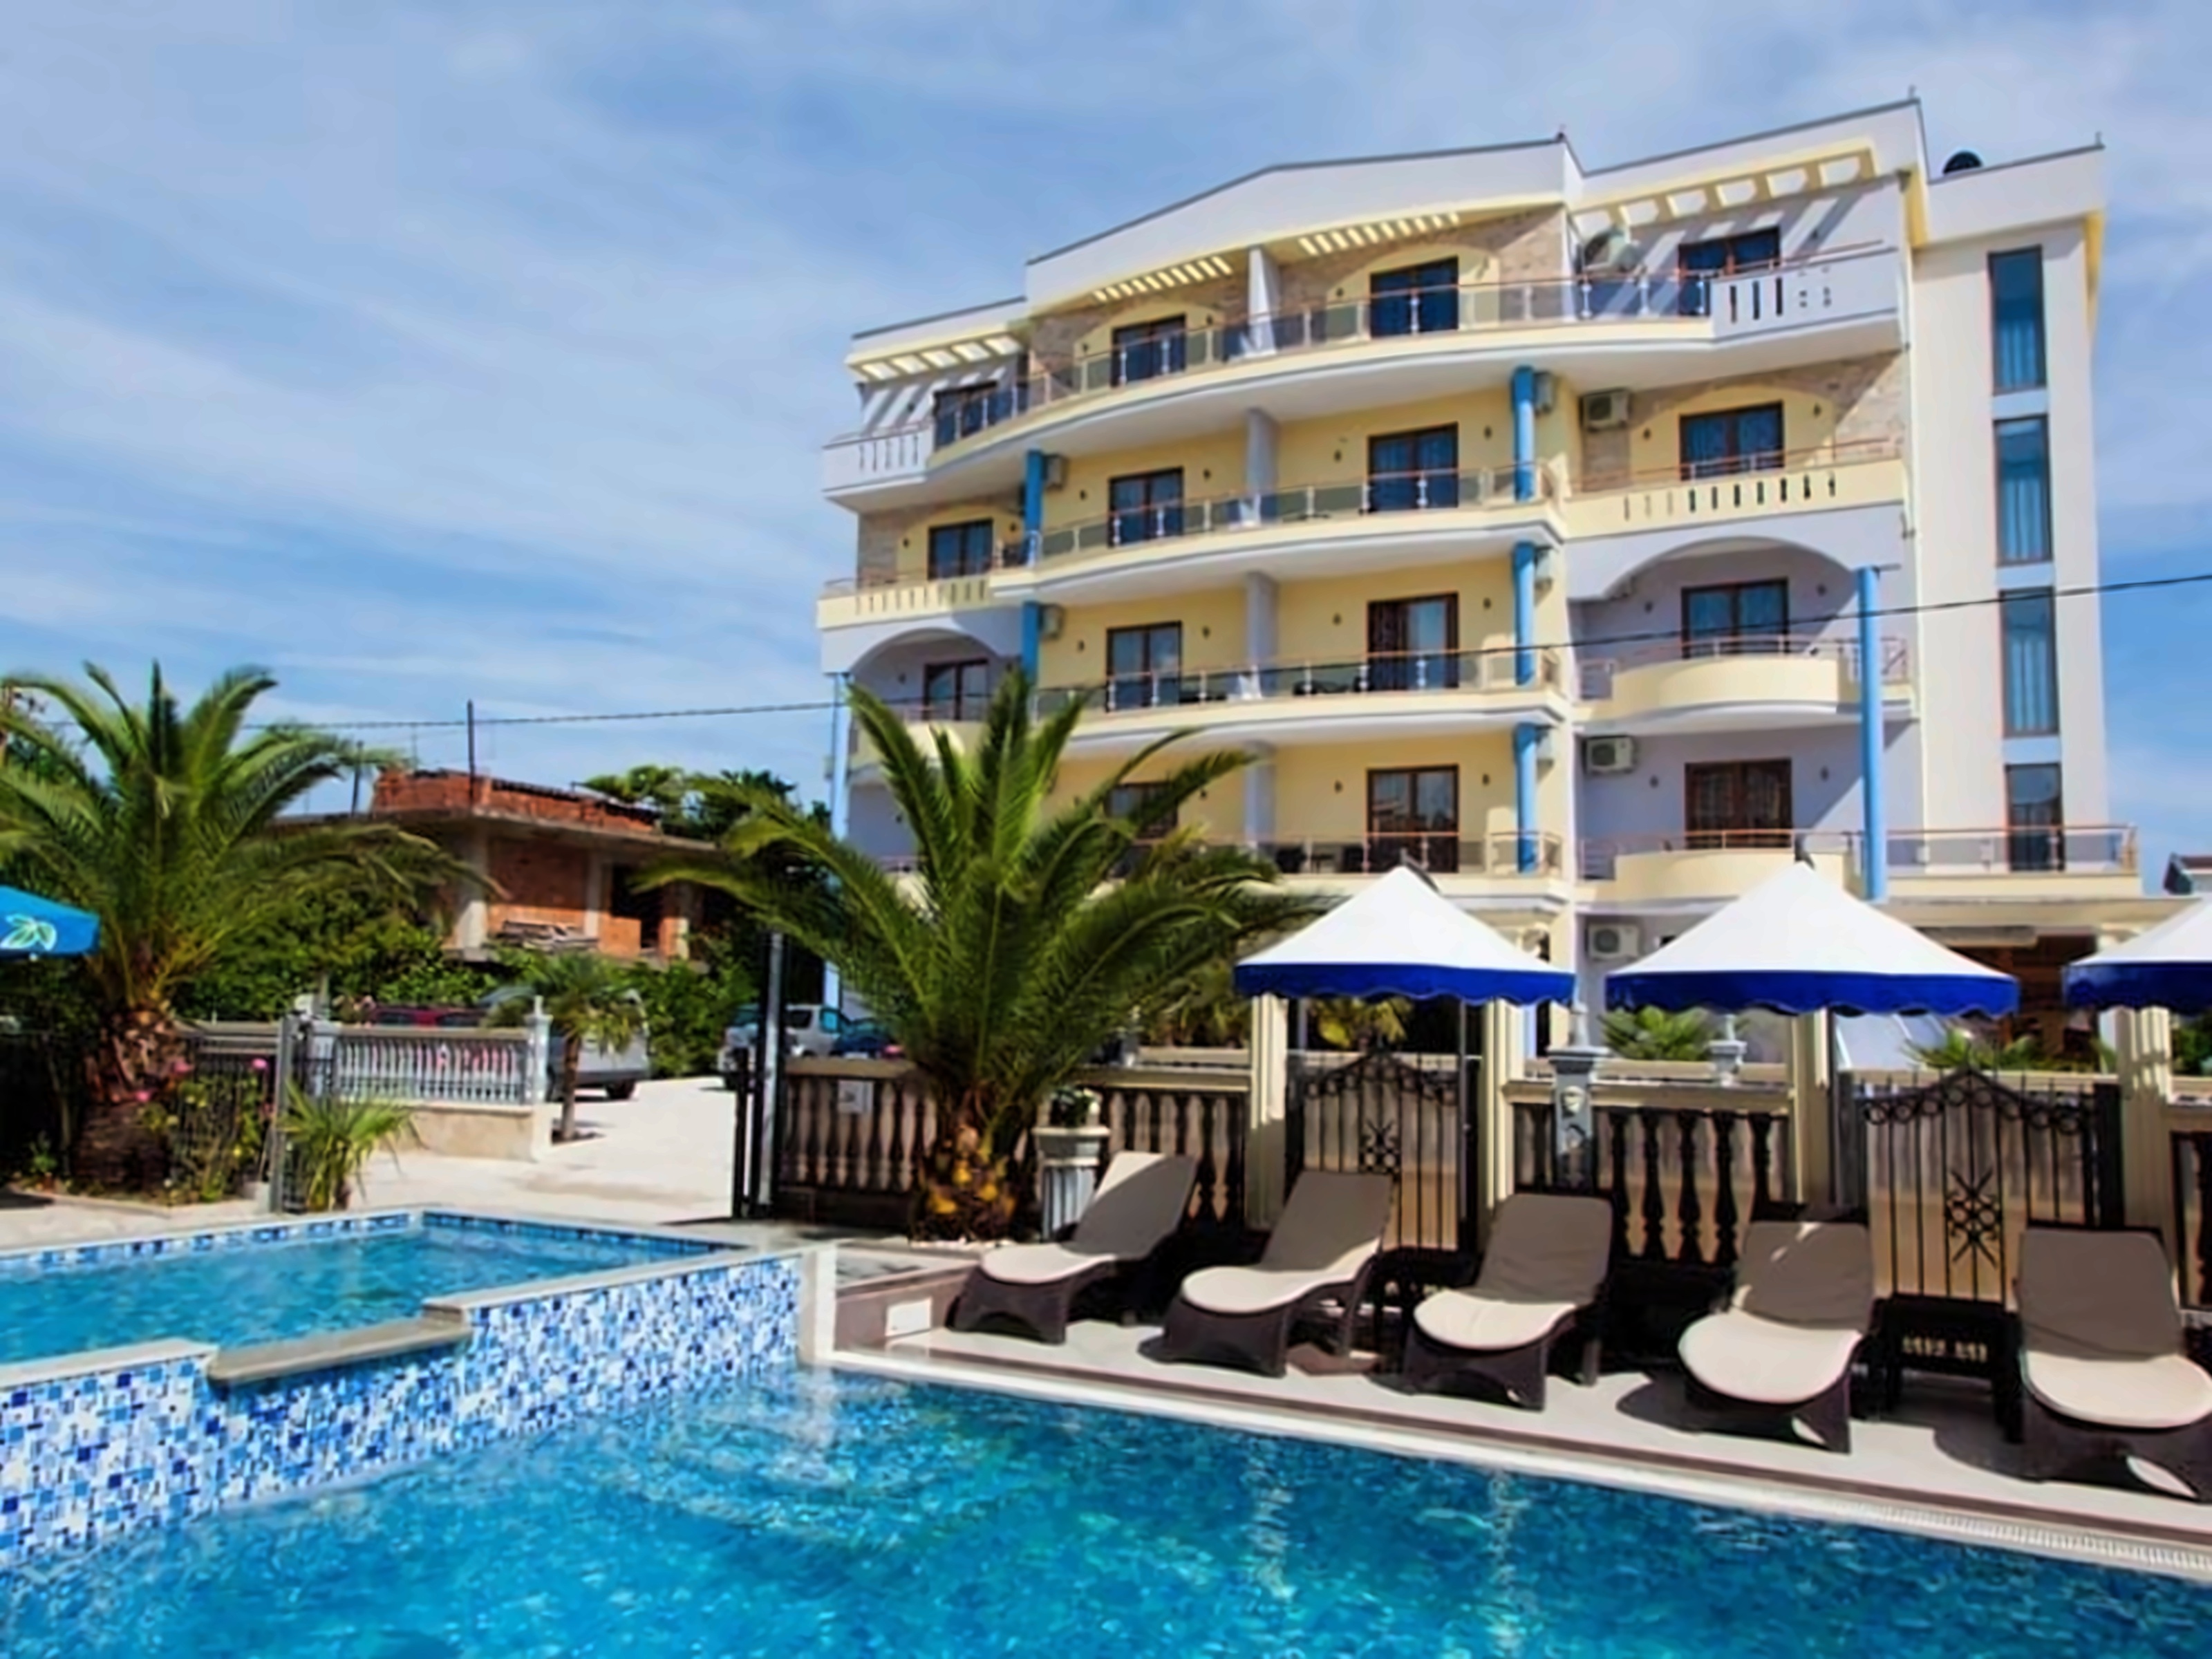 Montefila Hotel Velika plaza Montenegro photo, price for the vacation ...